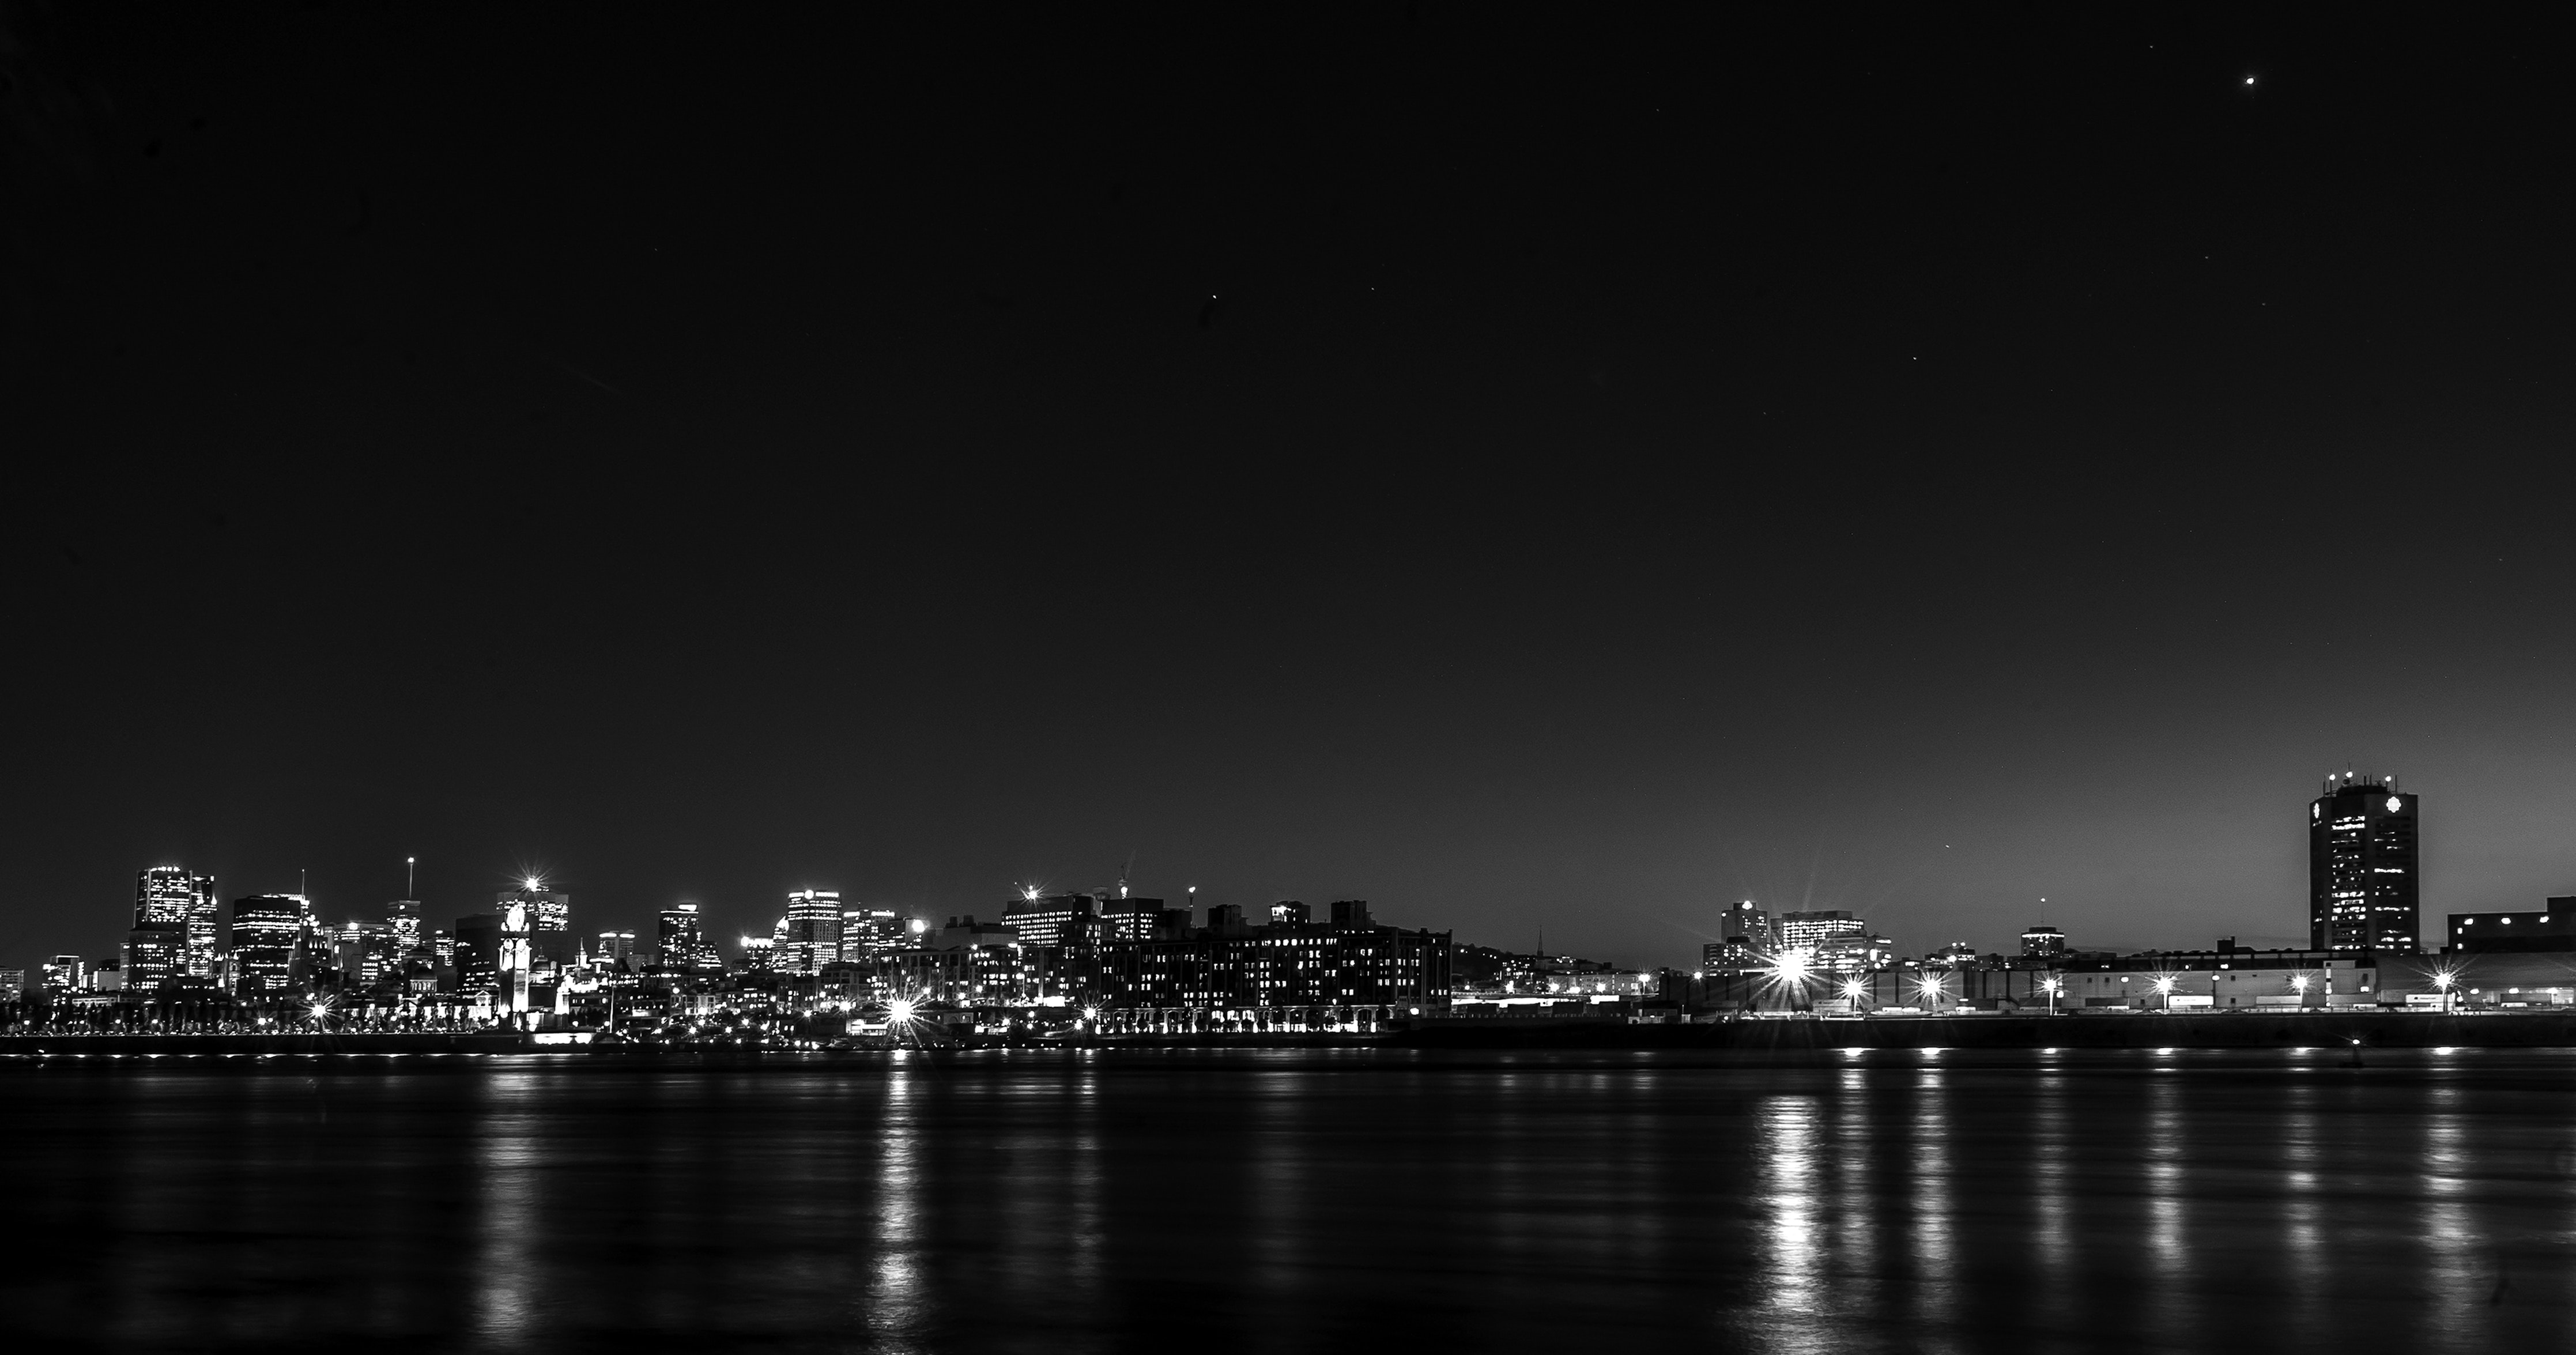 City lit up at night photo